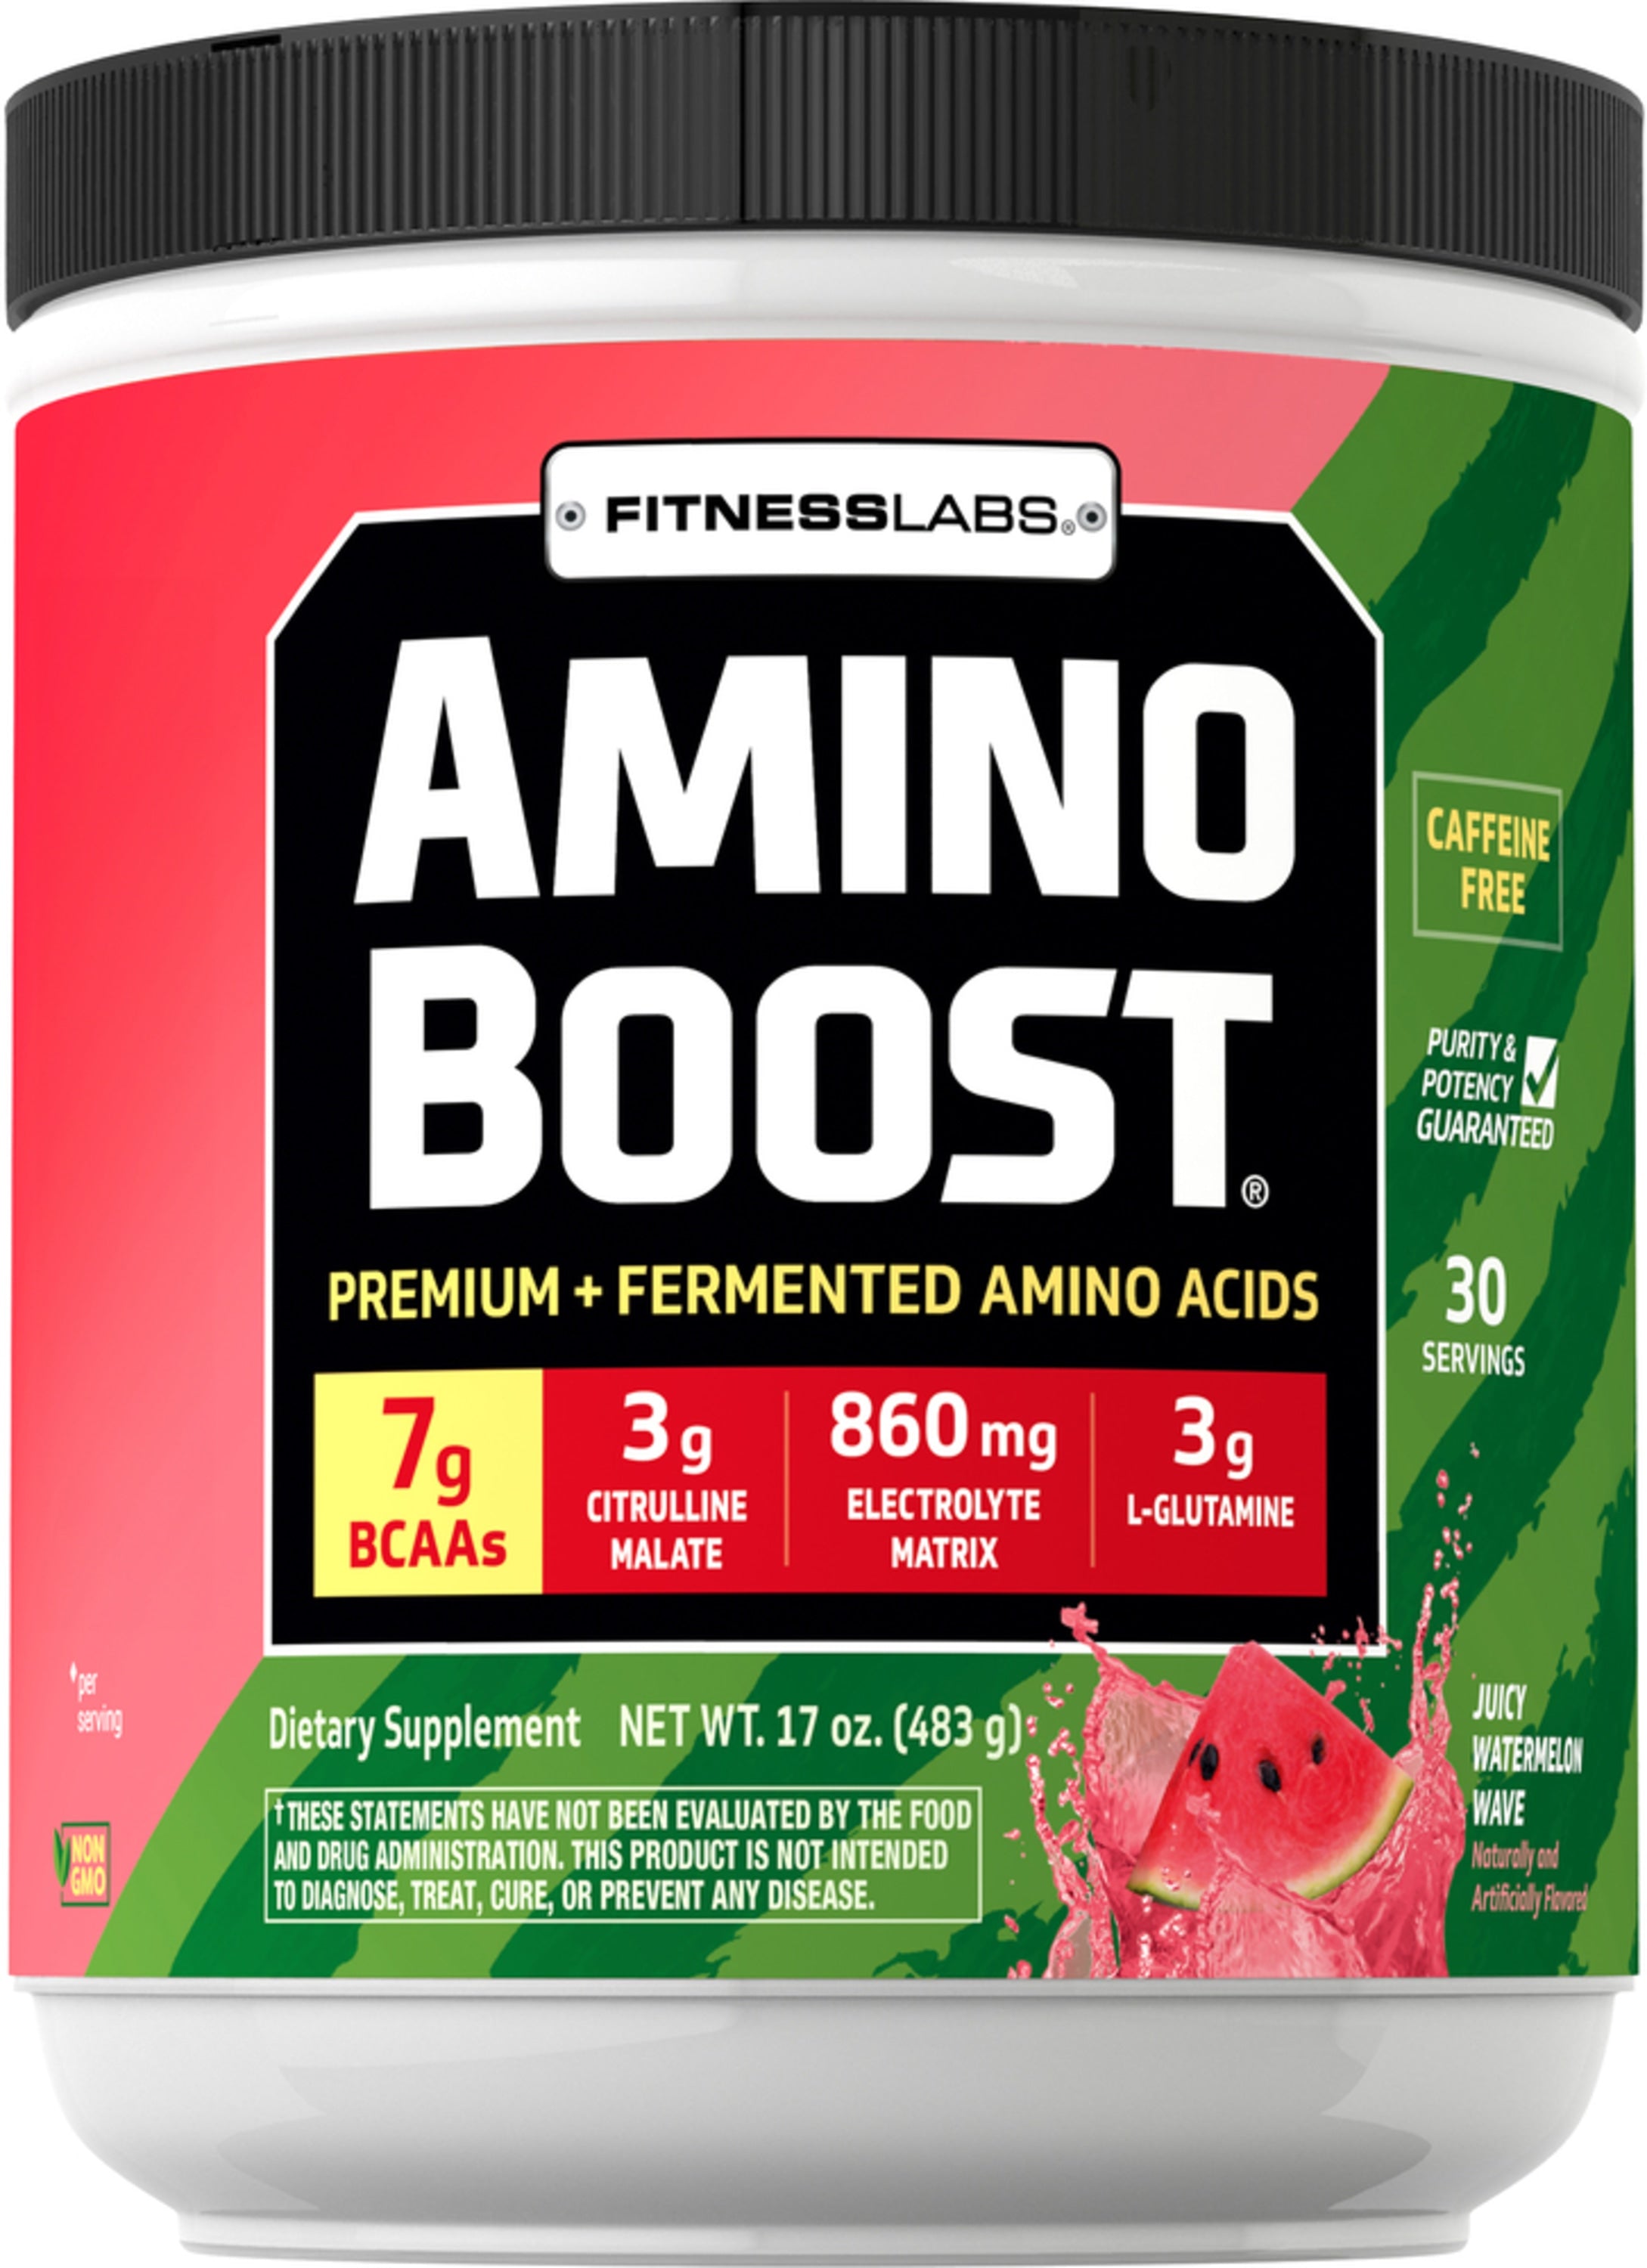 Amino Boost BCAA Powder (Juicy Watermelon Wave), 17 oz (483 g) Bottle